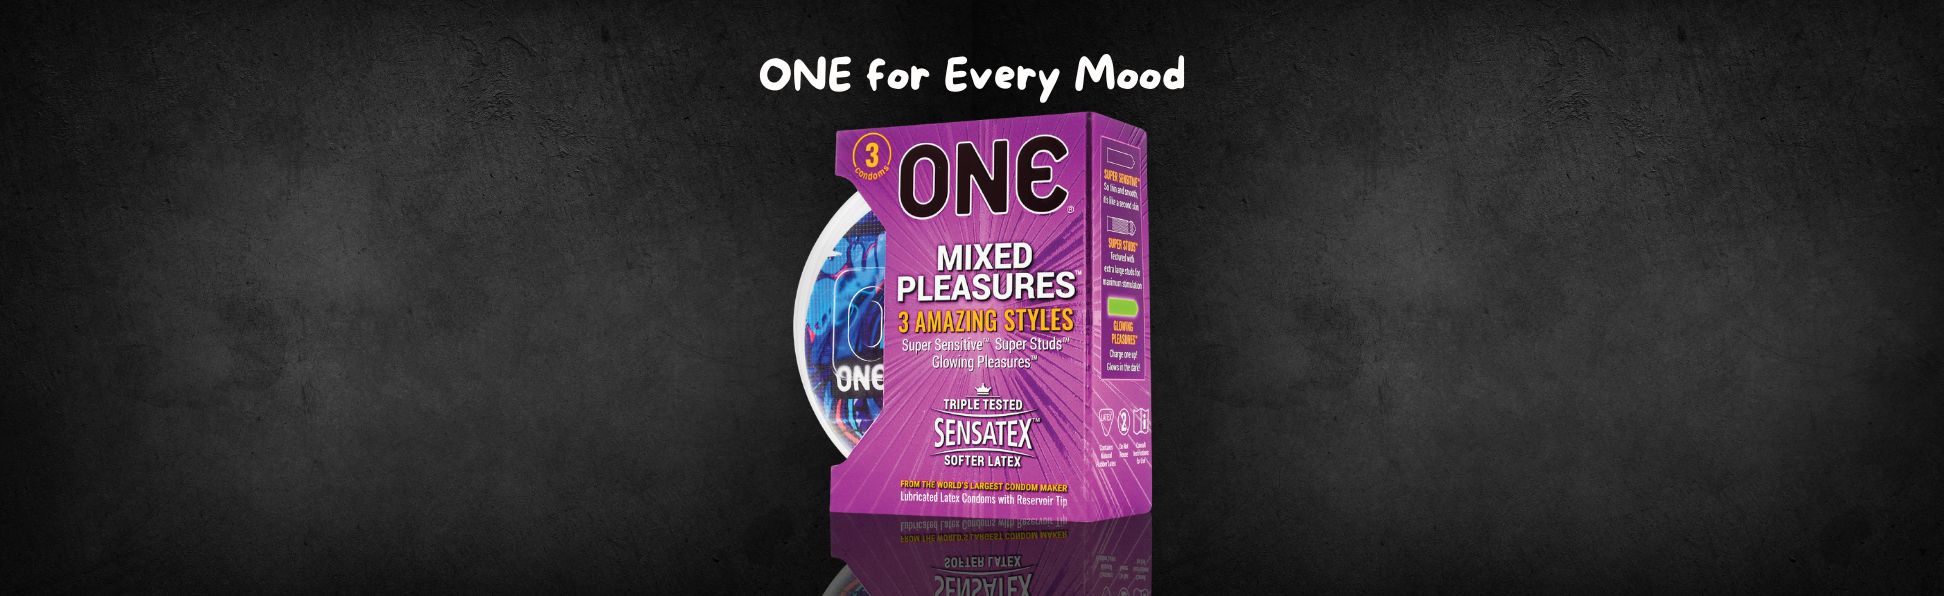 One mixed pleasure condoms pack